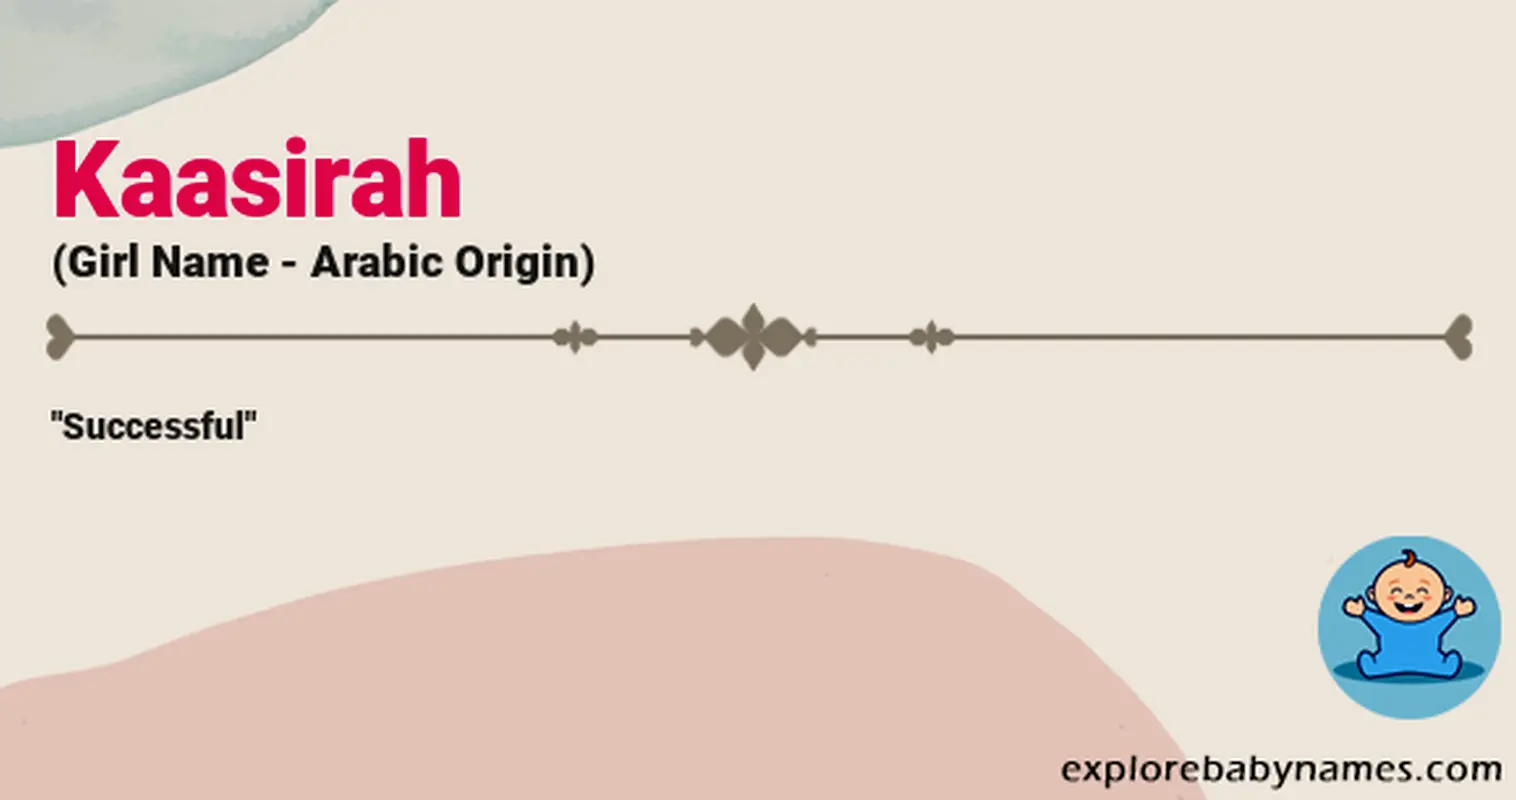 Meaning of Kaasirah